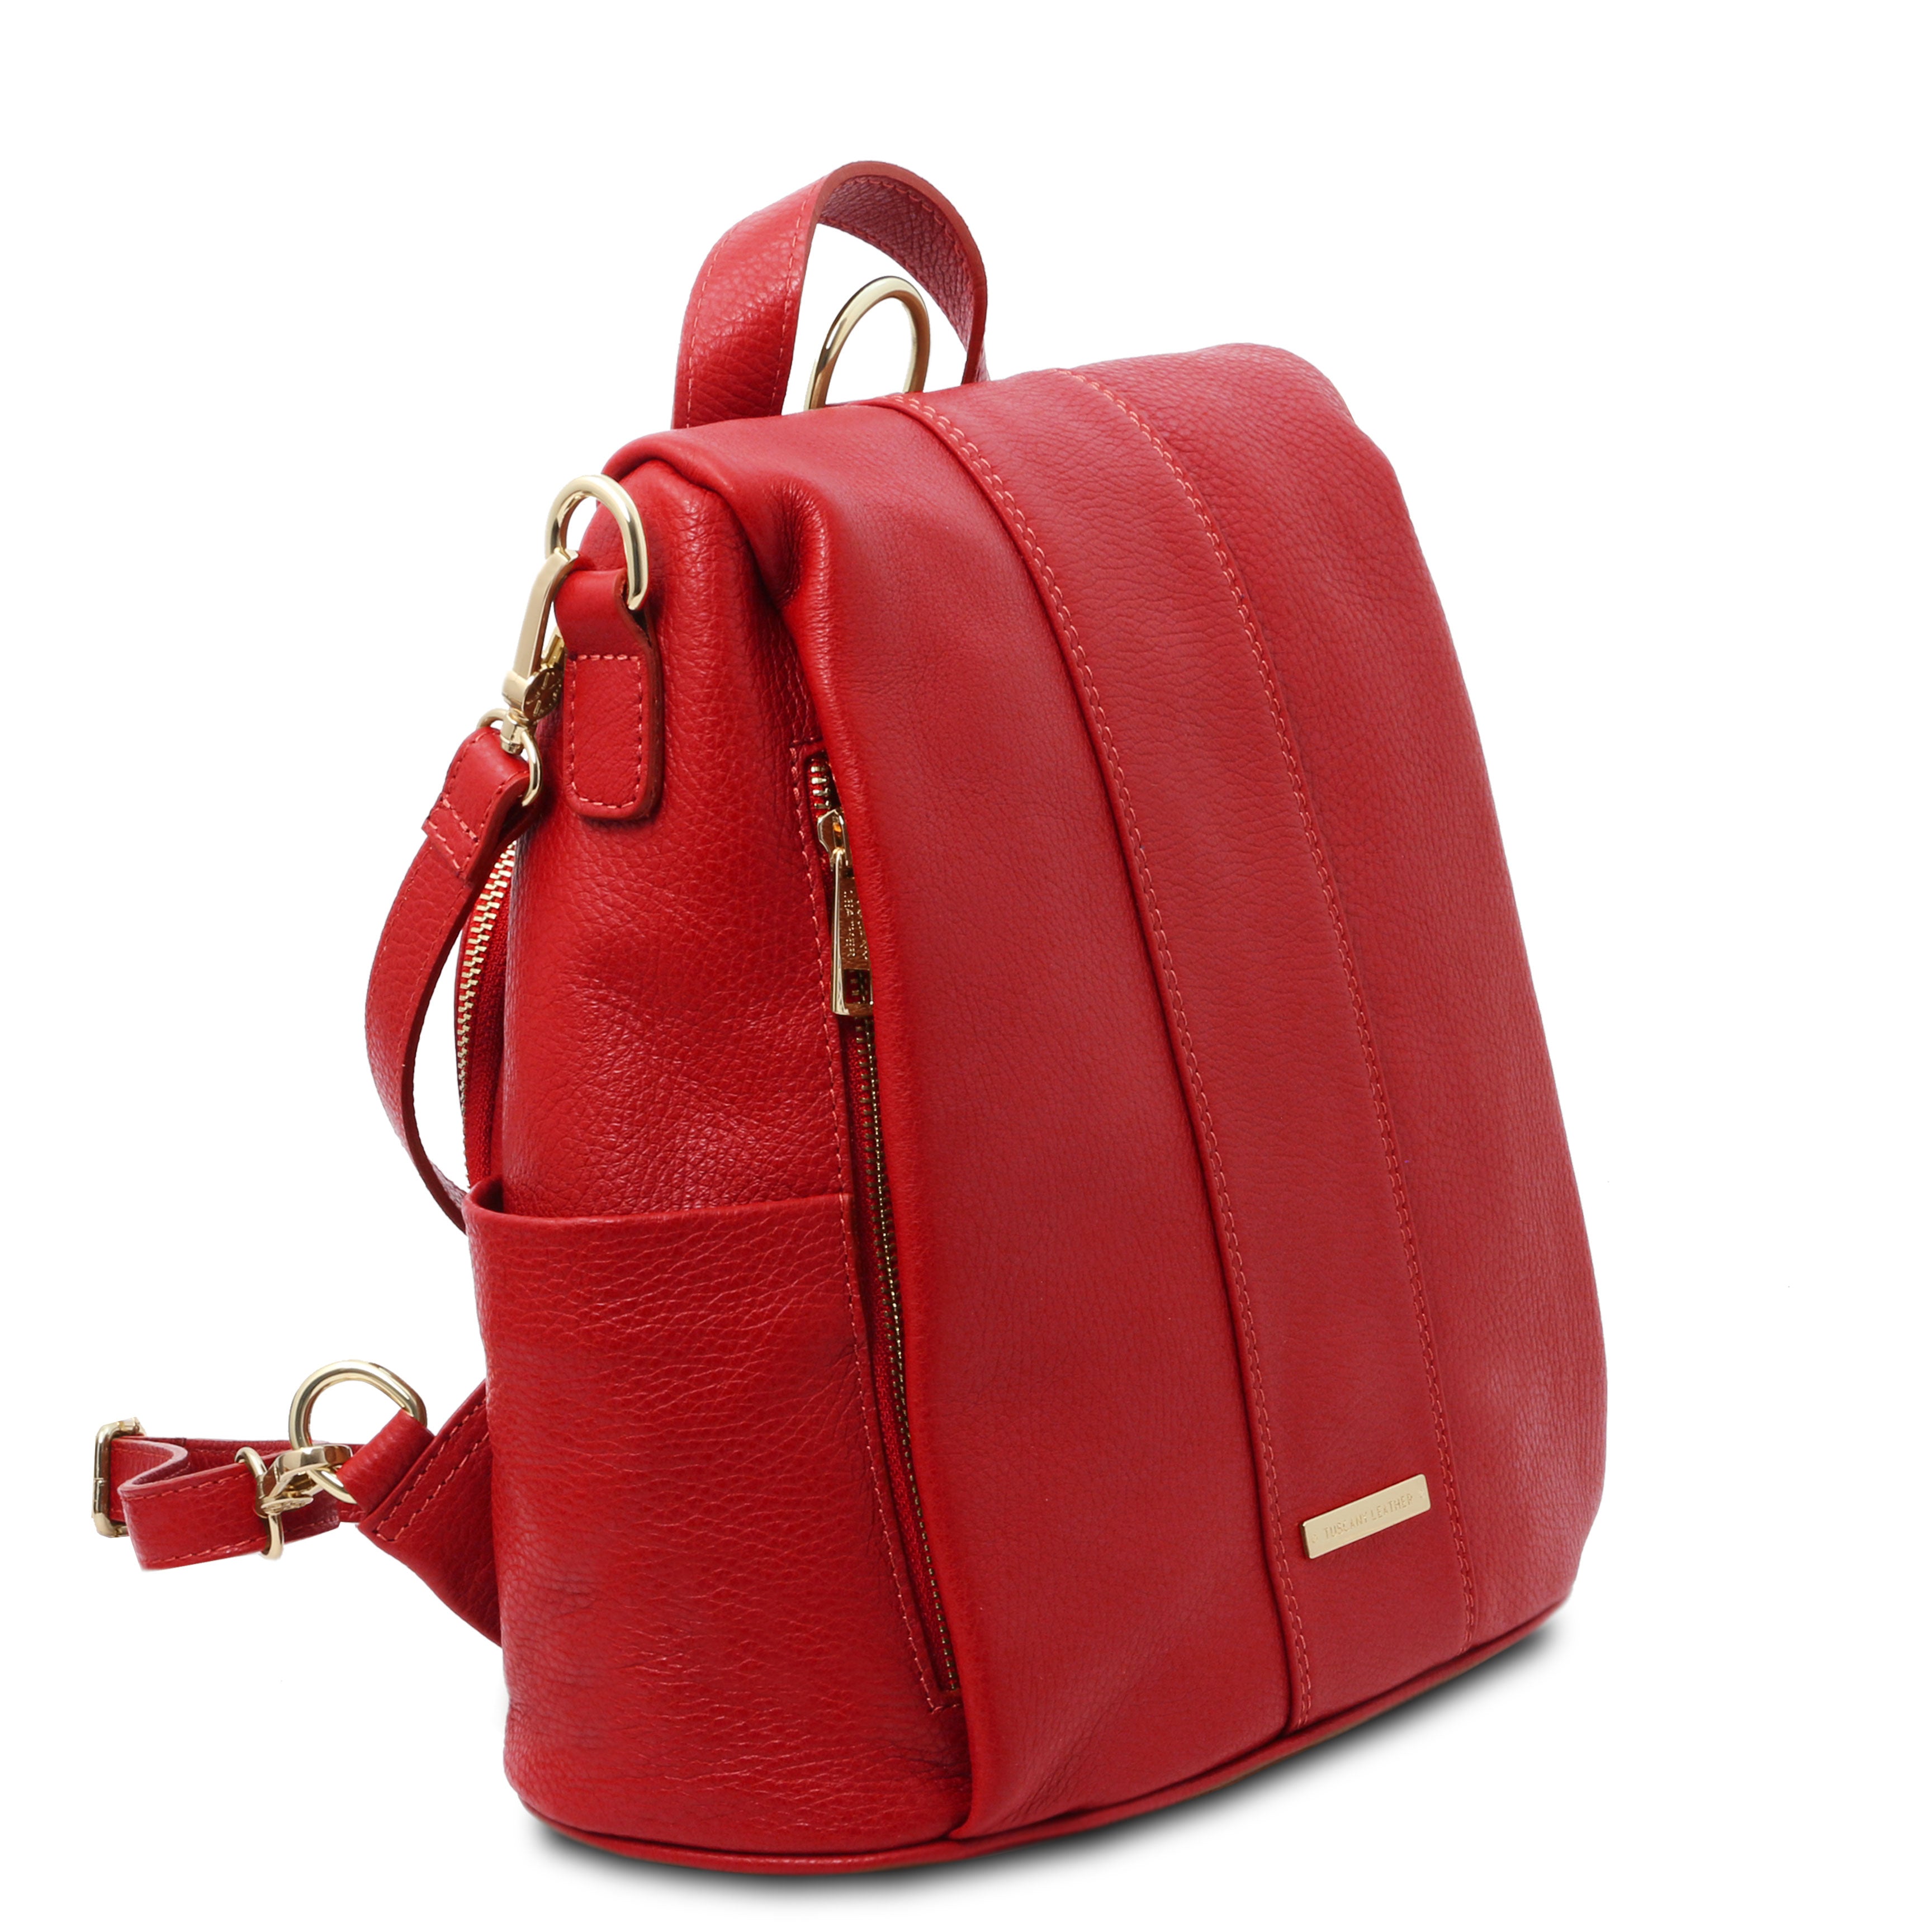 Tuscany Leather rugtas zacht leer TL Bag rood zijkant tas